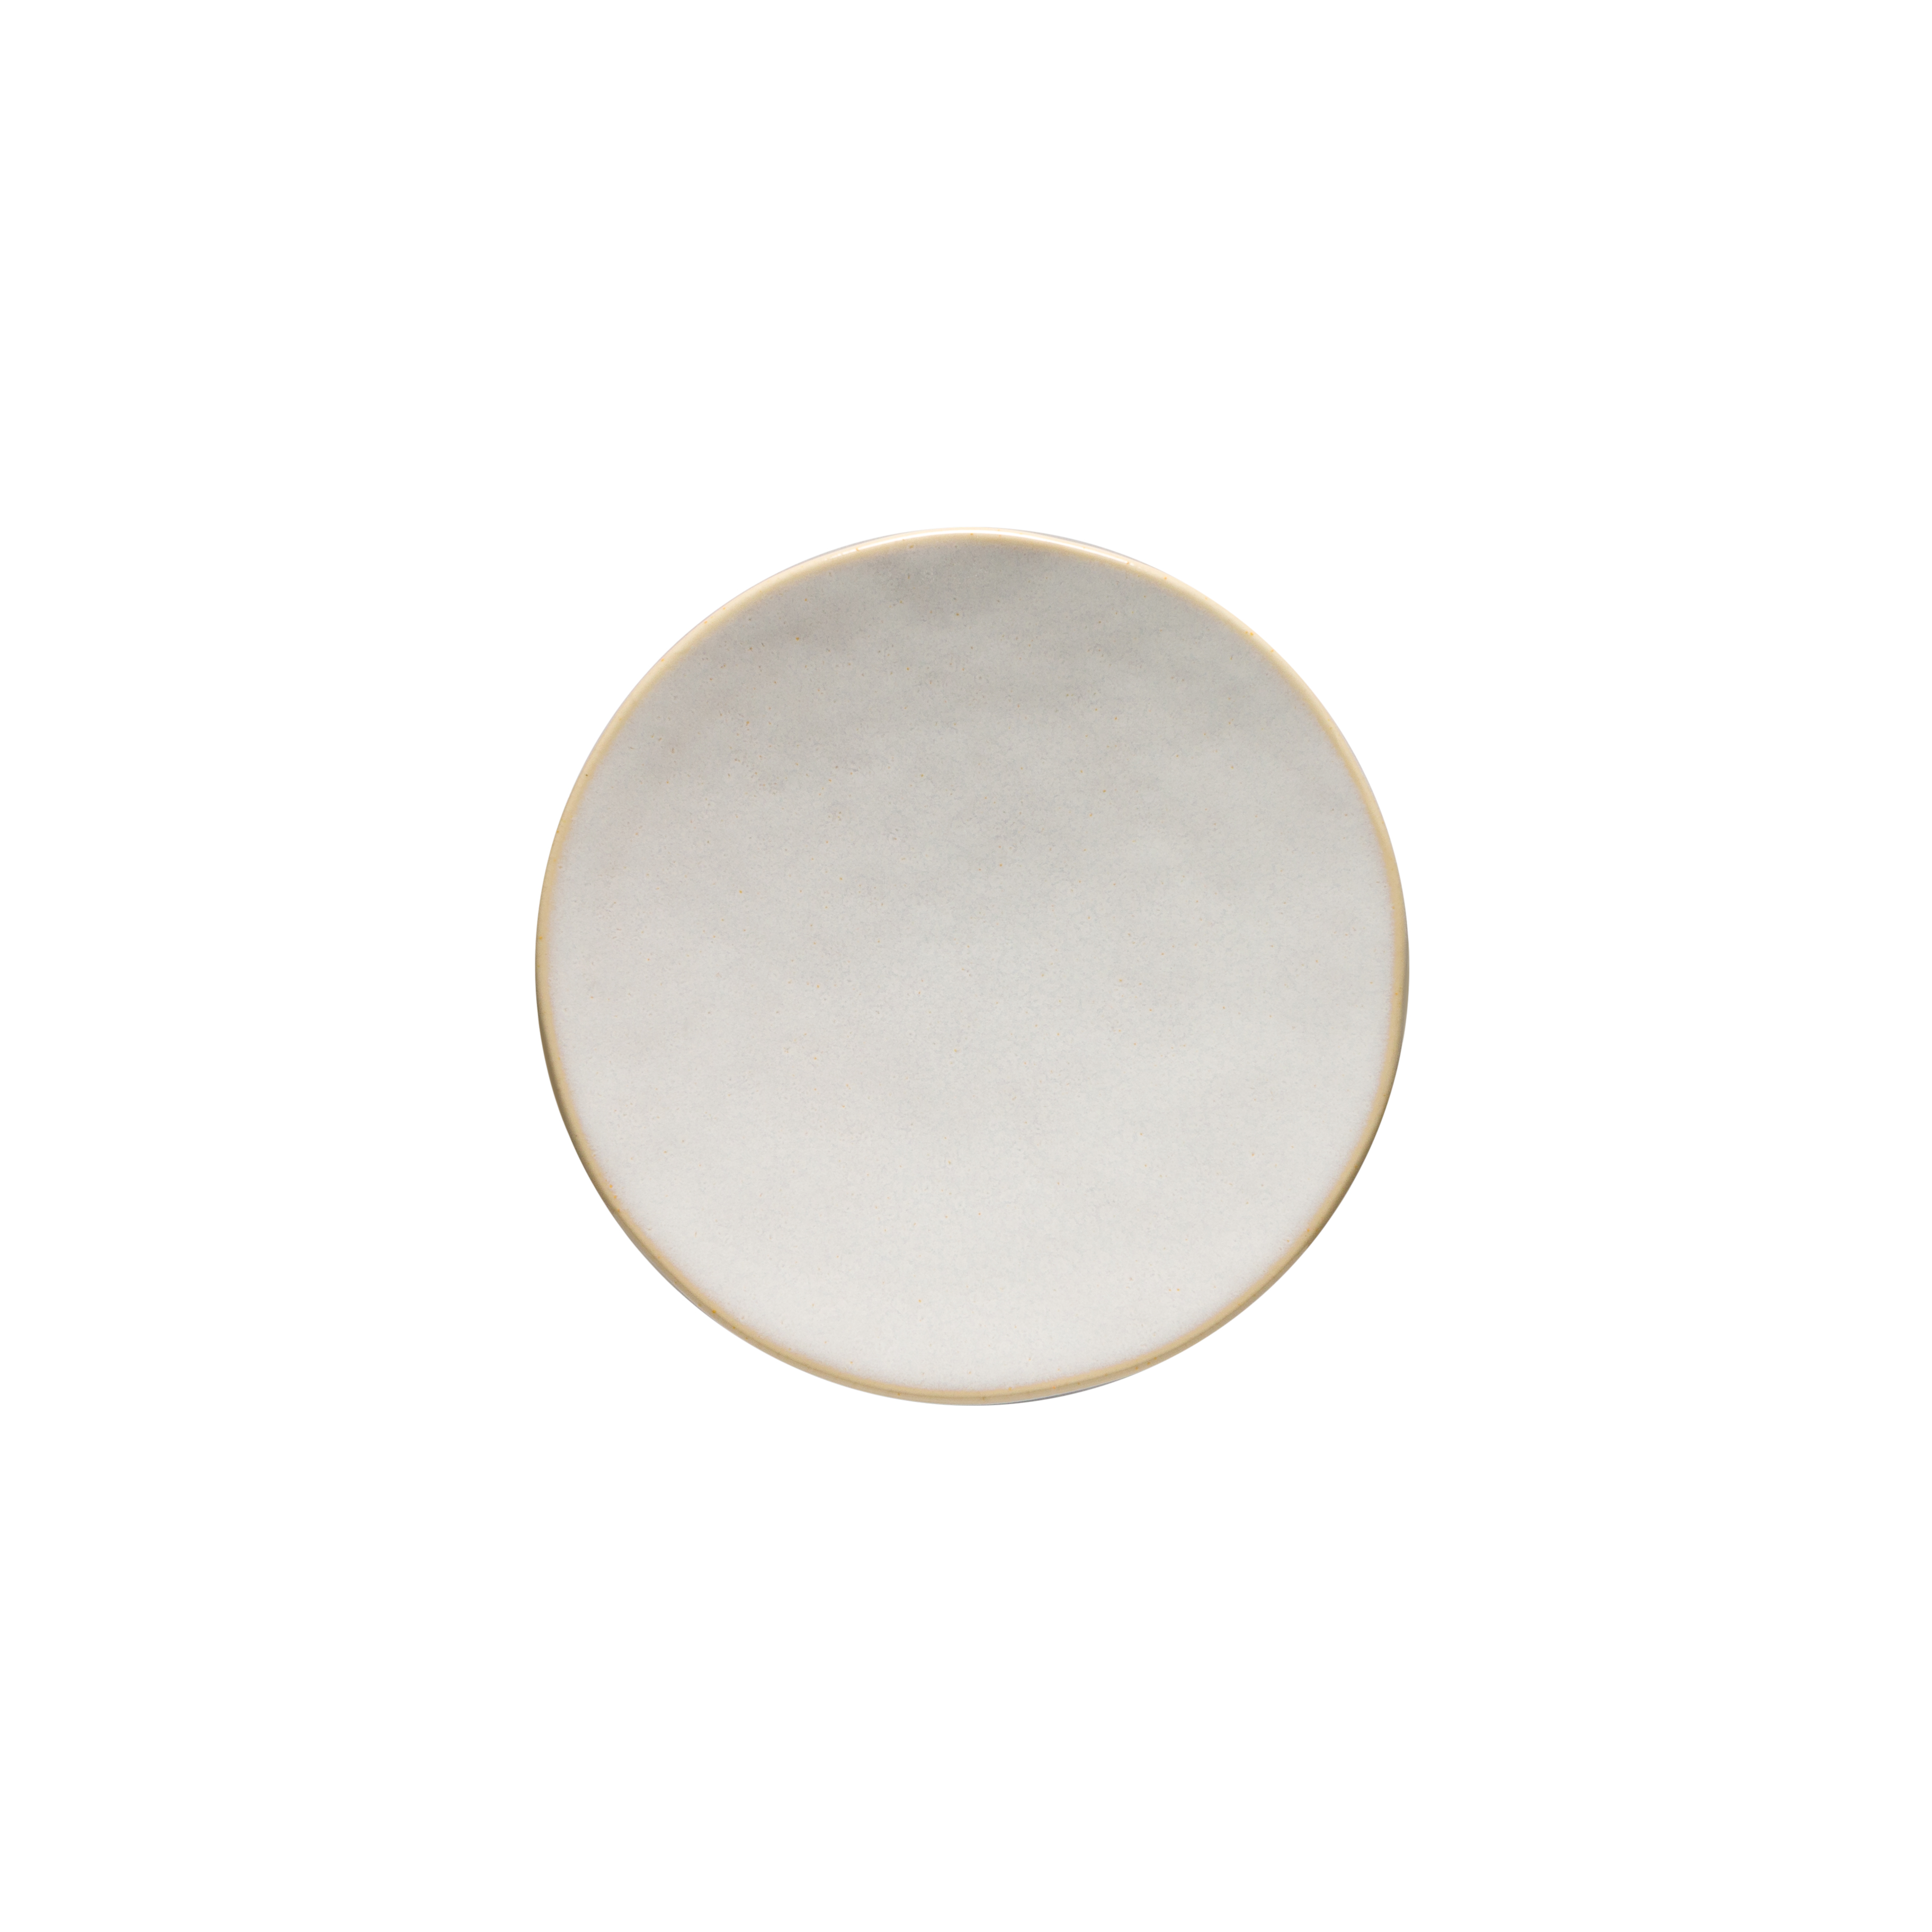 Roda White Round Plate 18.5cm Gift